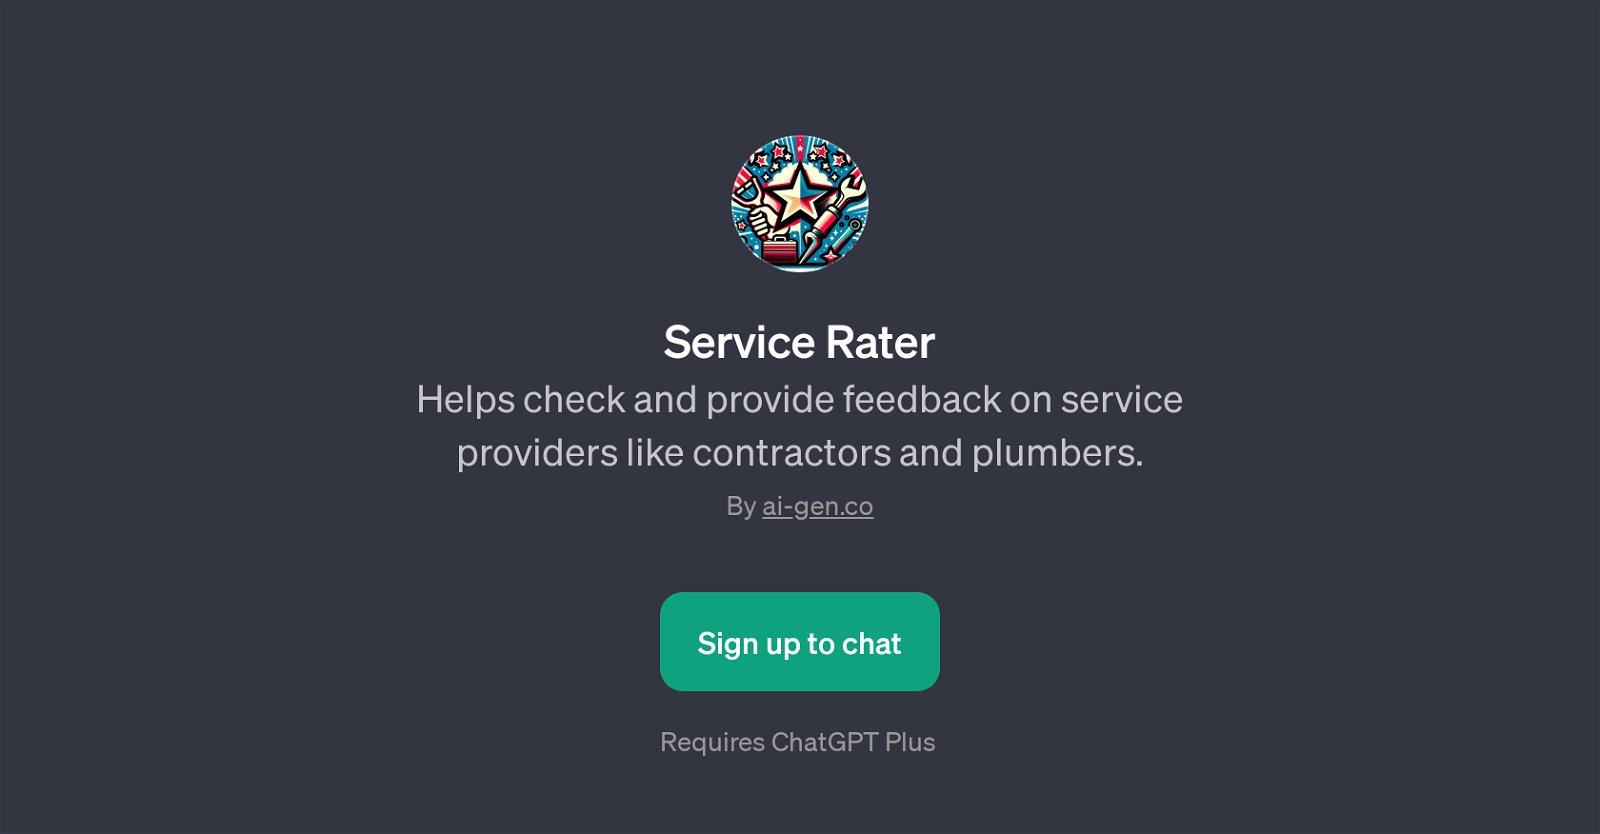 Service Rater website